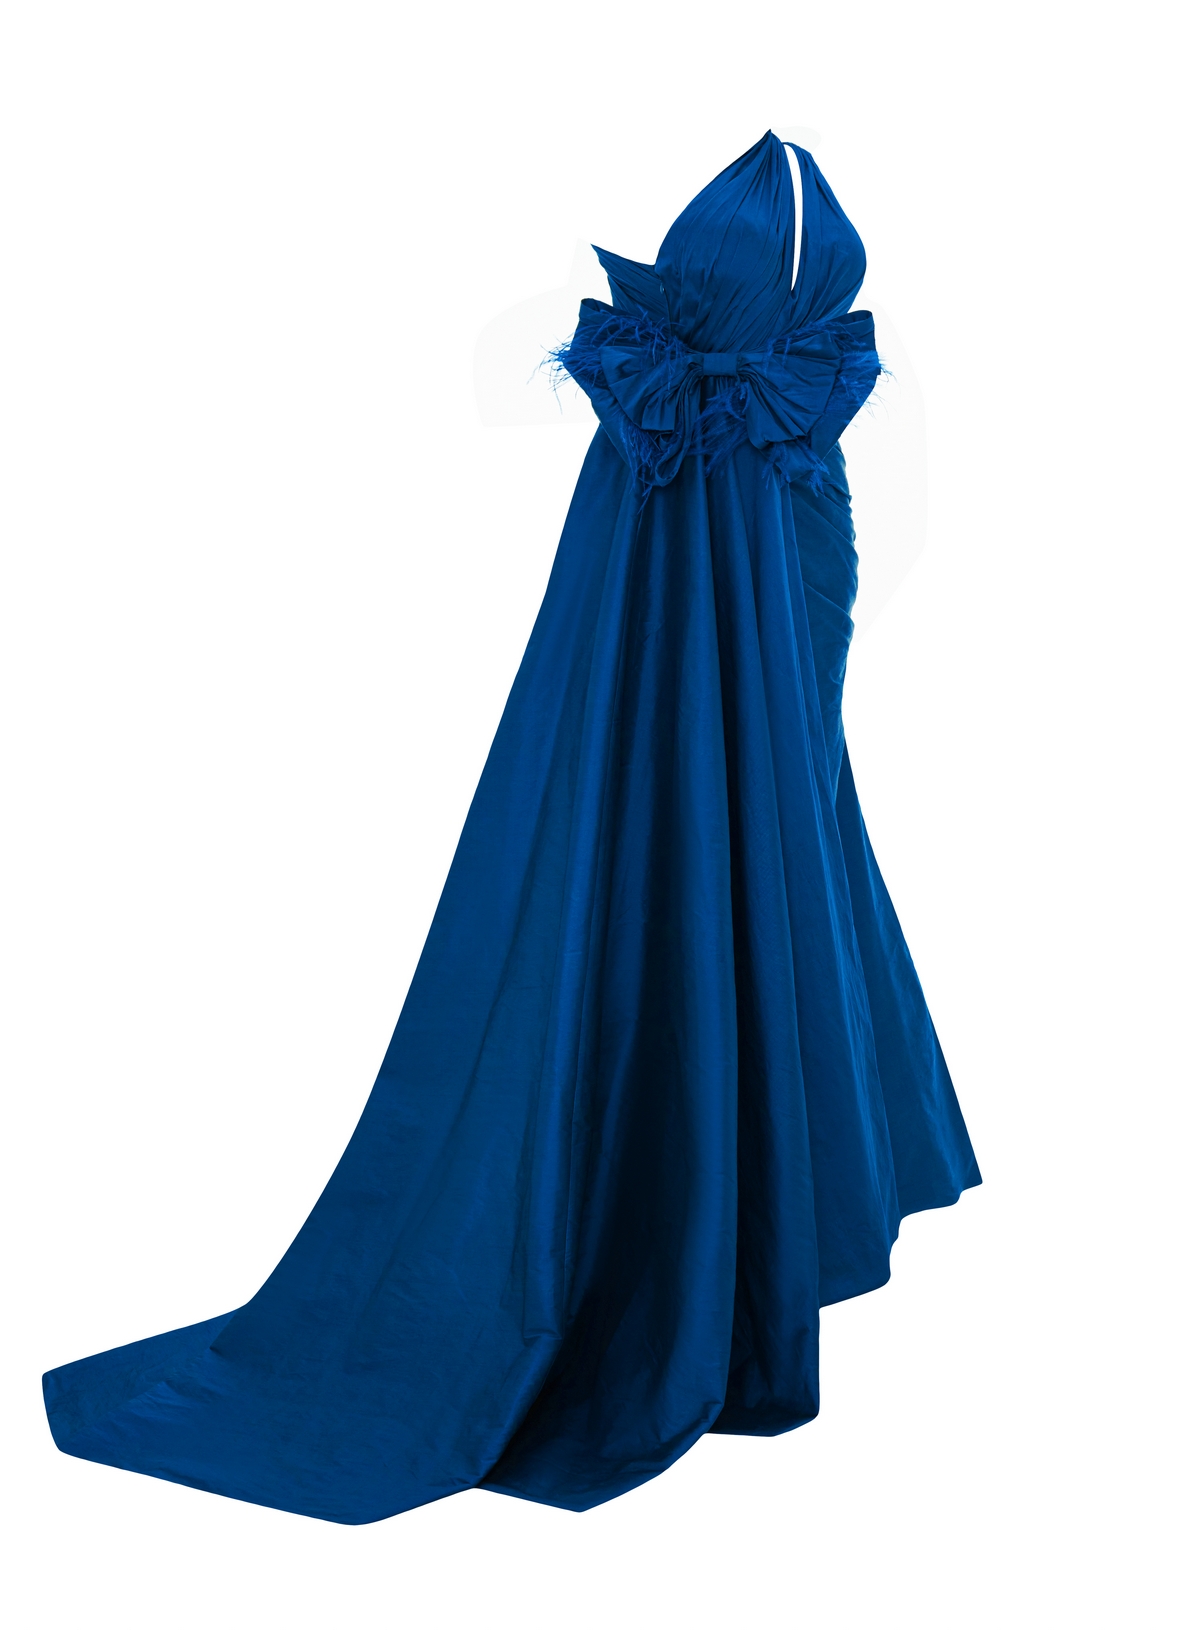 Picture of Nova Royal Blue Dress